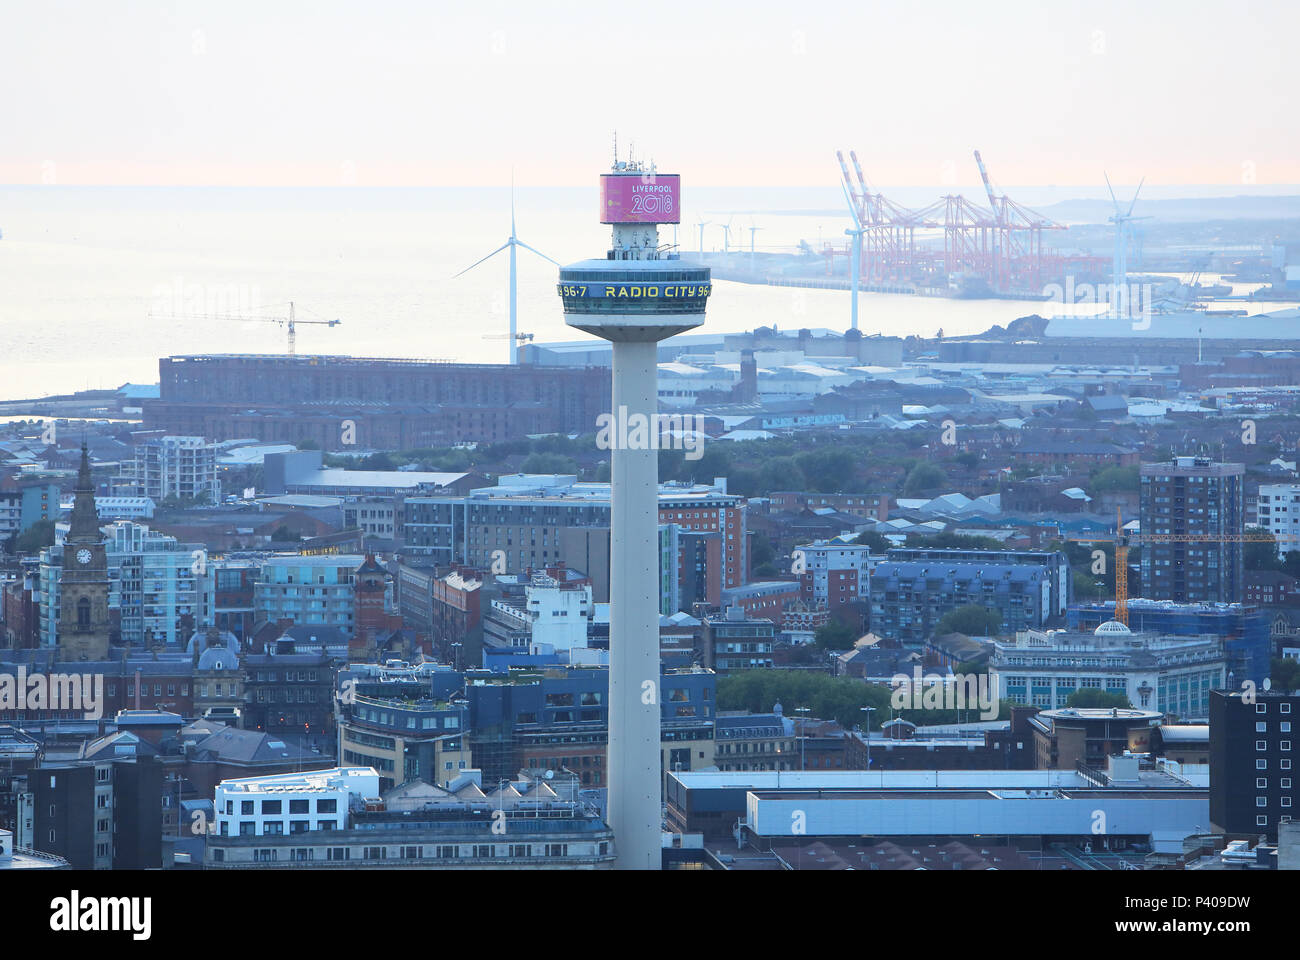 Radio City Tower, or St John's Beacon, in Liverpool, on Merseyside, NW England, UK Stock Photo